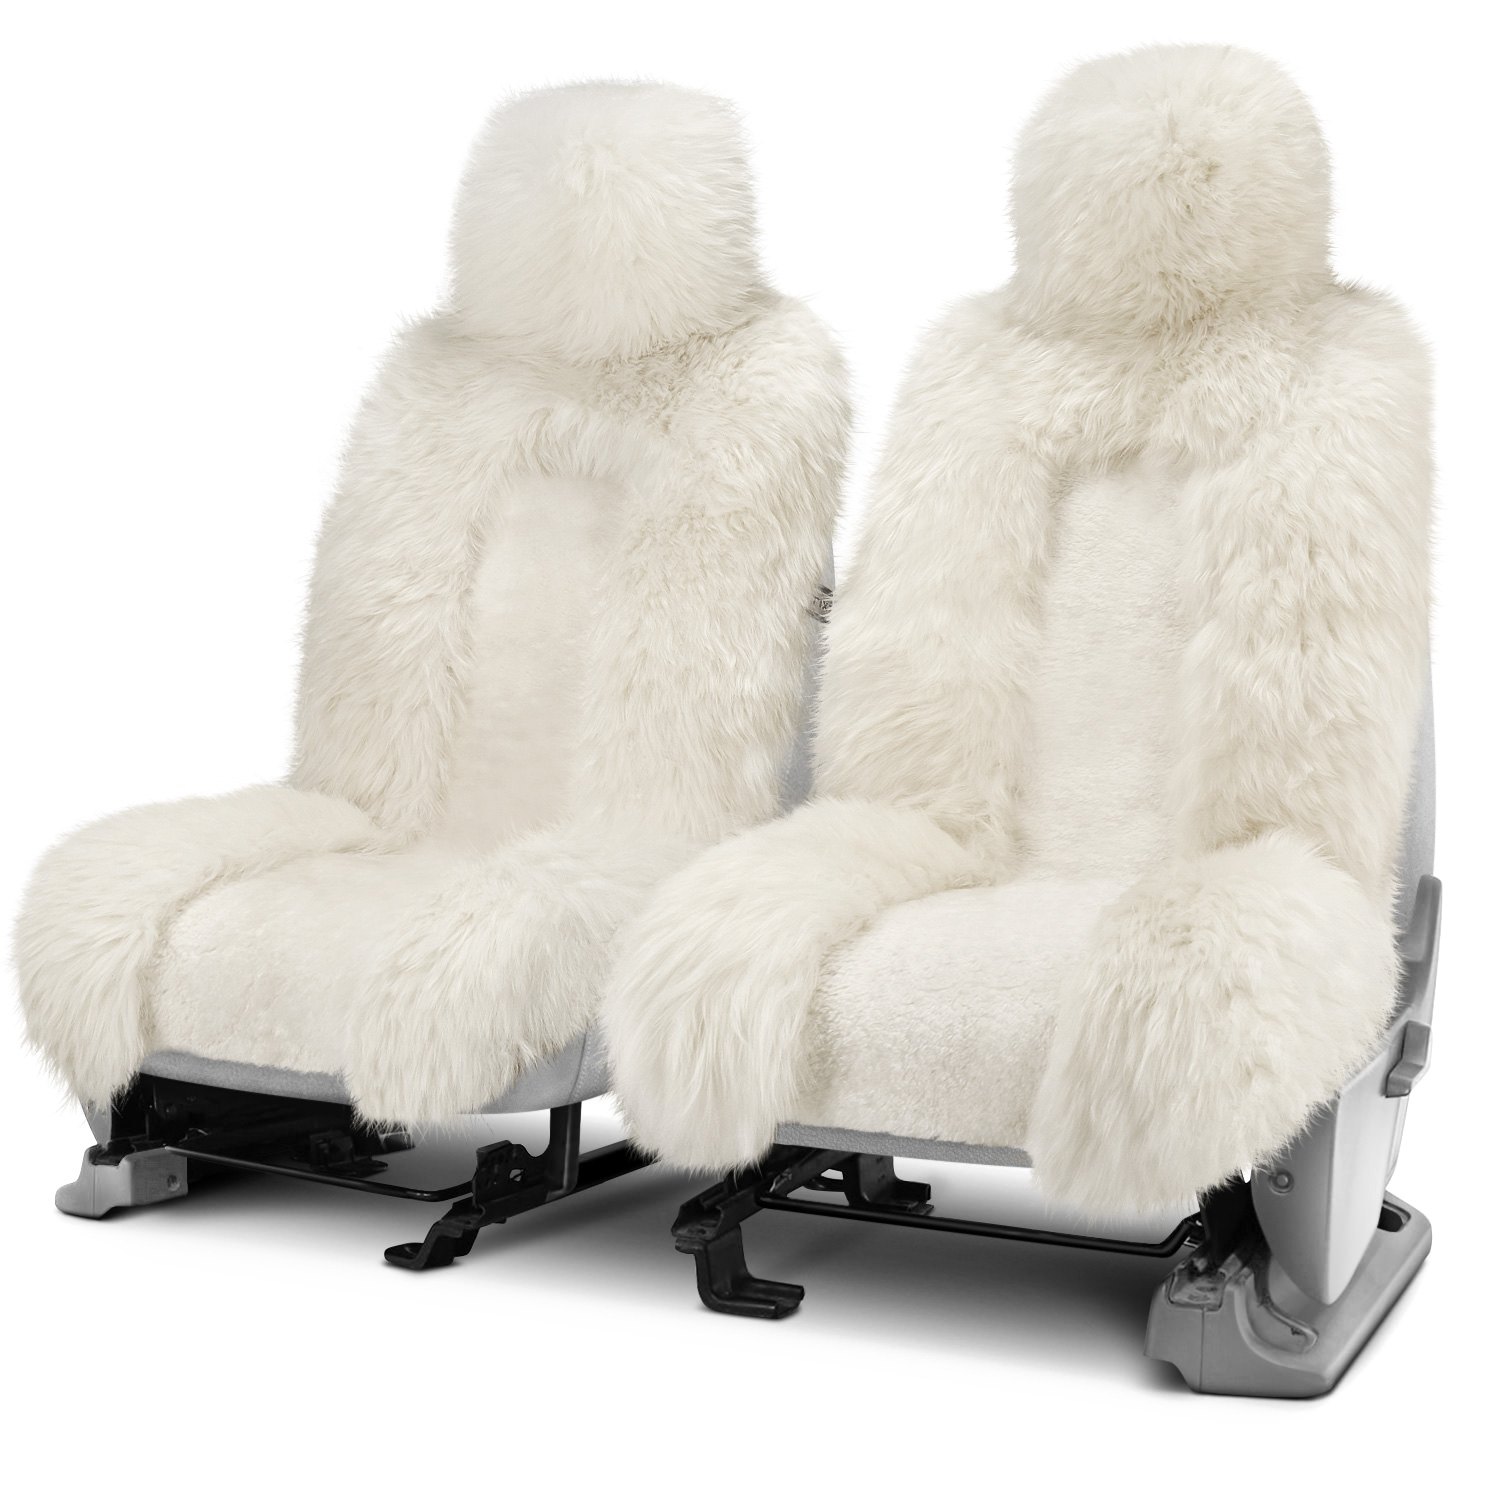 Sheepskin Seat Cushion for Car, Truck or RV